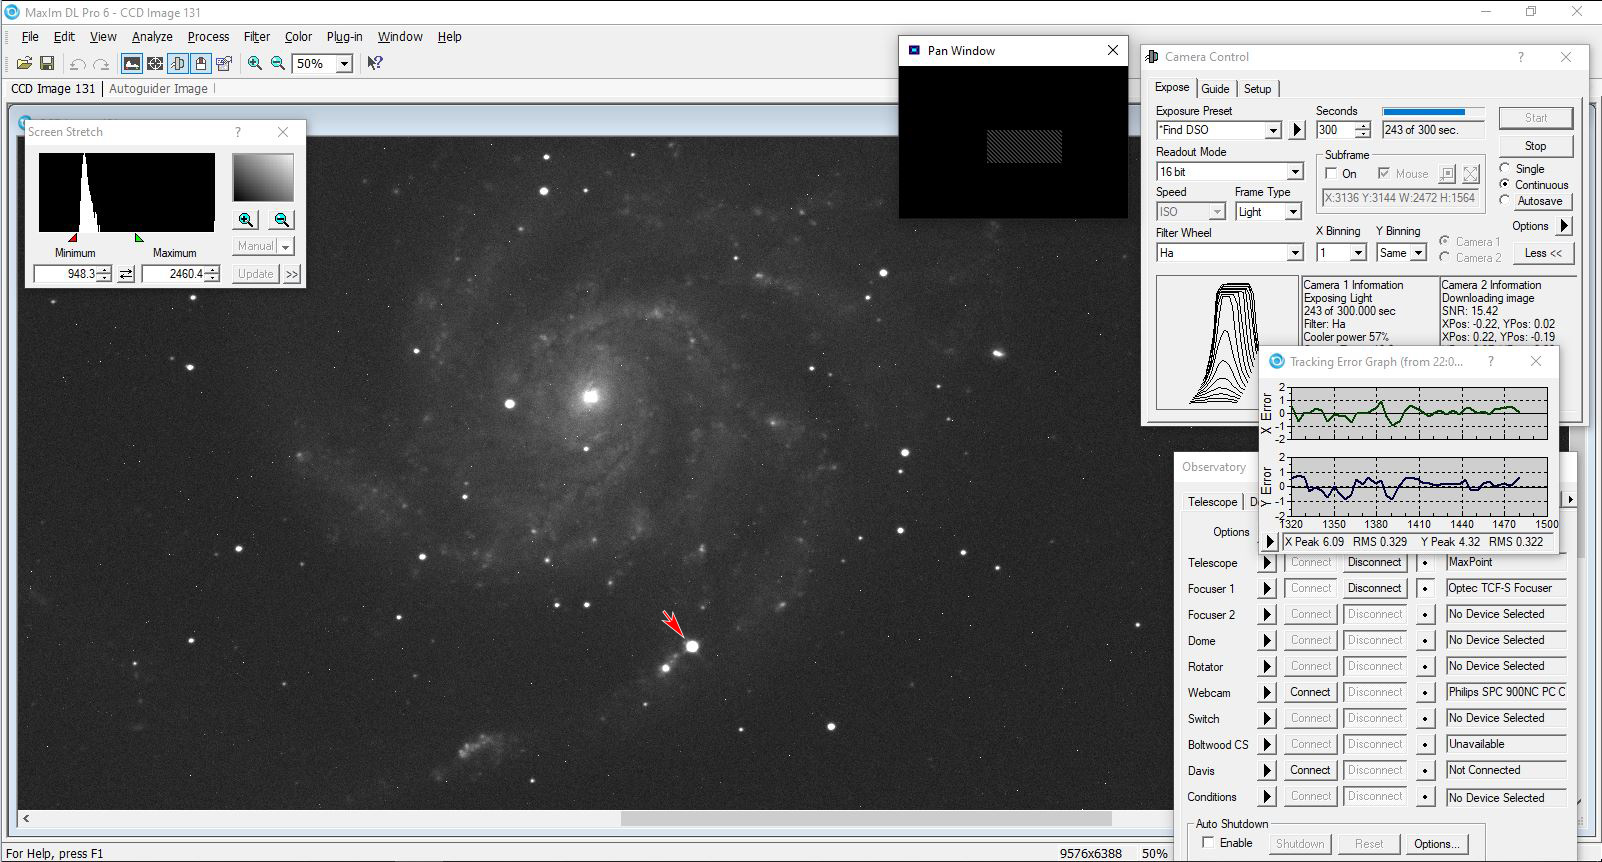 M101_SN.JPG